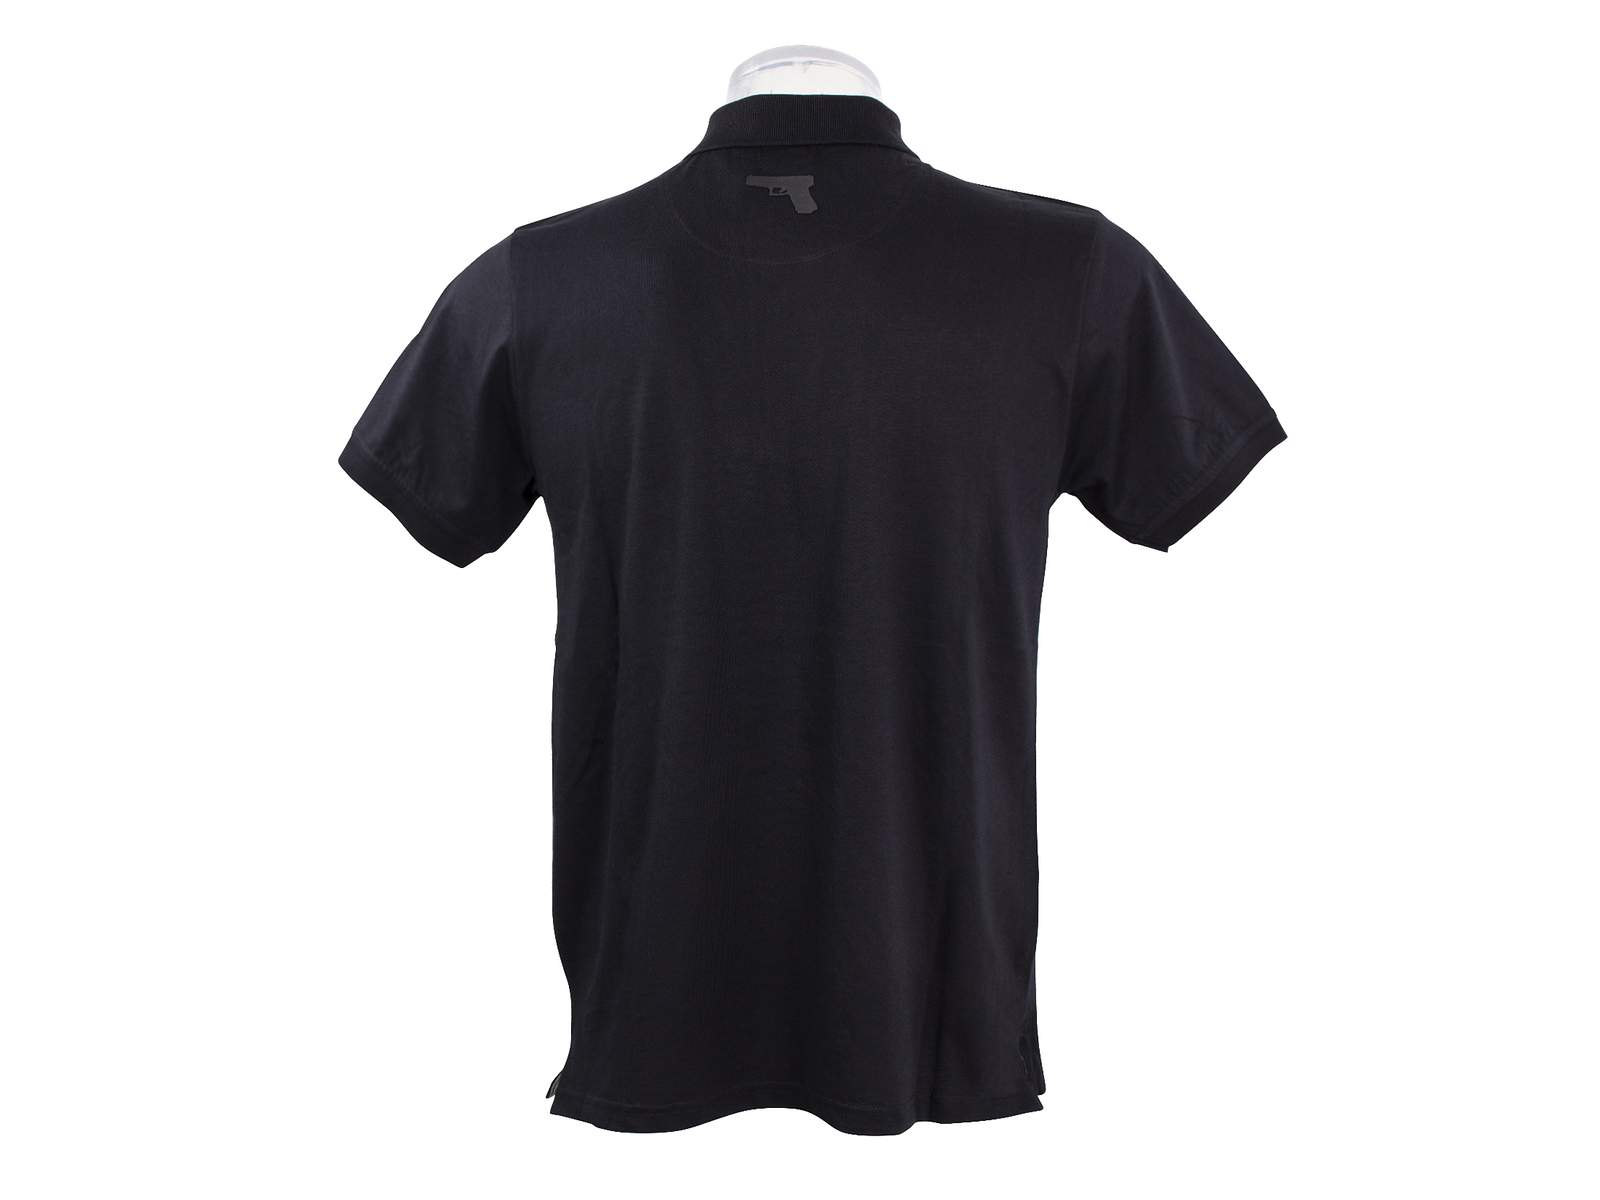 GLOCK APPAREL/Polo GLOCK Perfection ポロシャツ Black (size L)